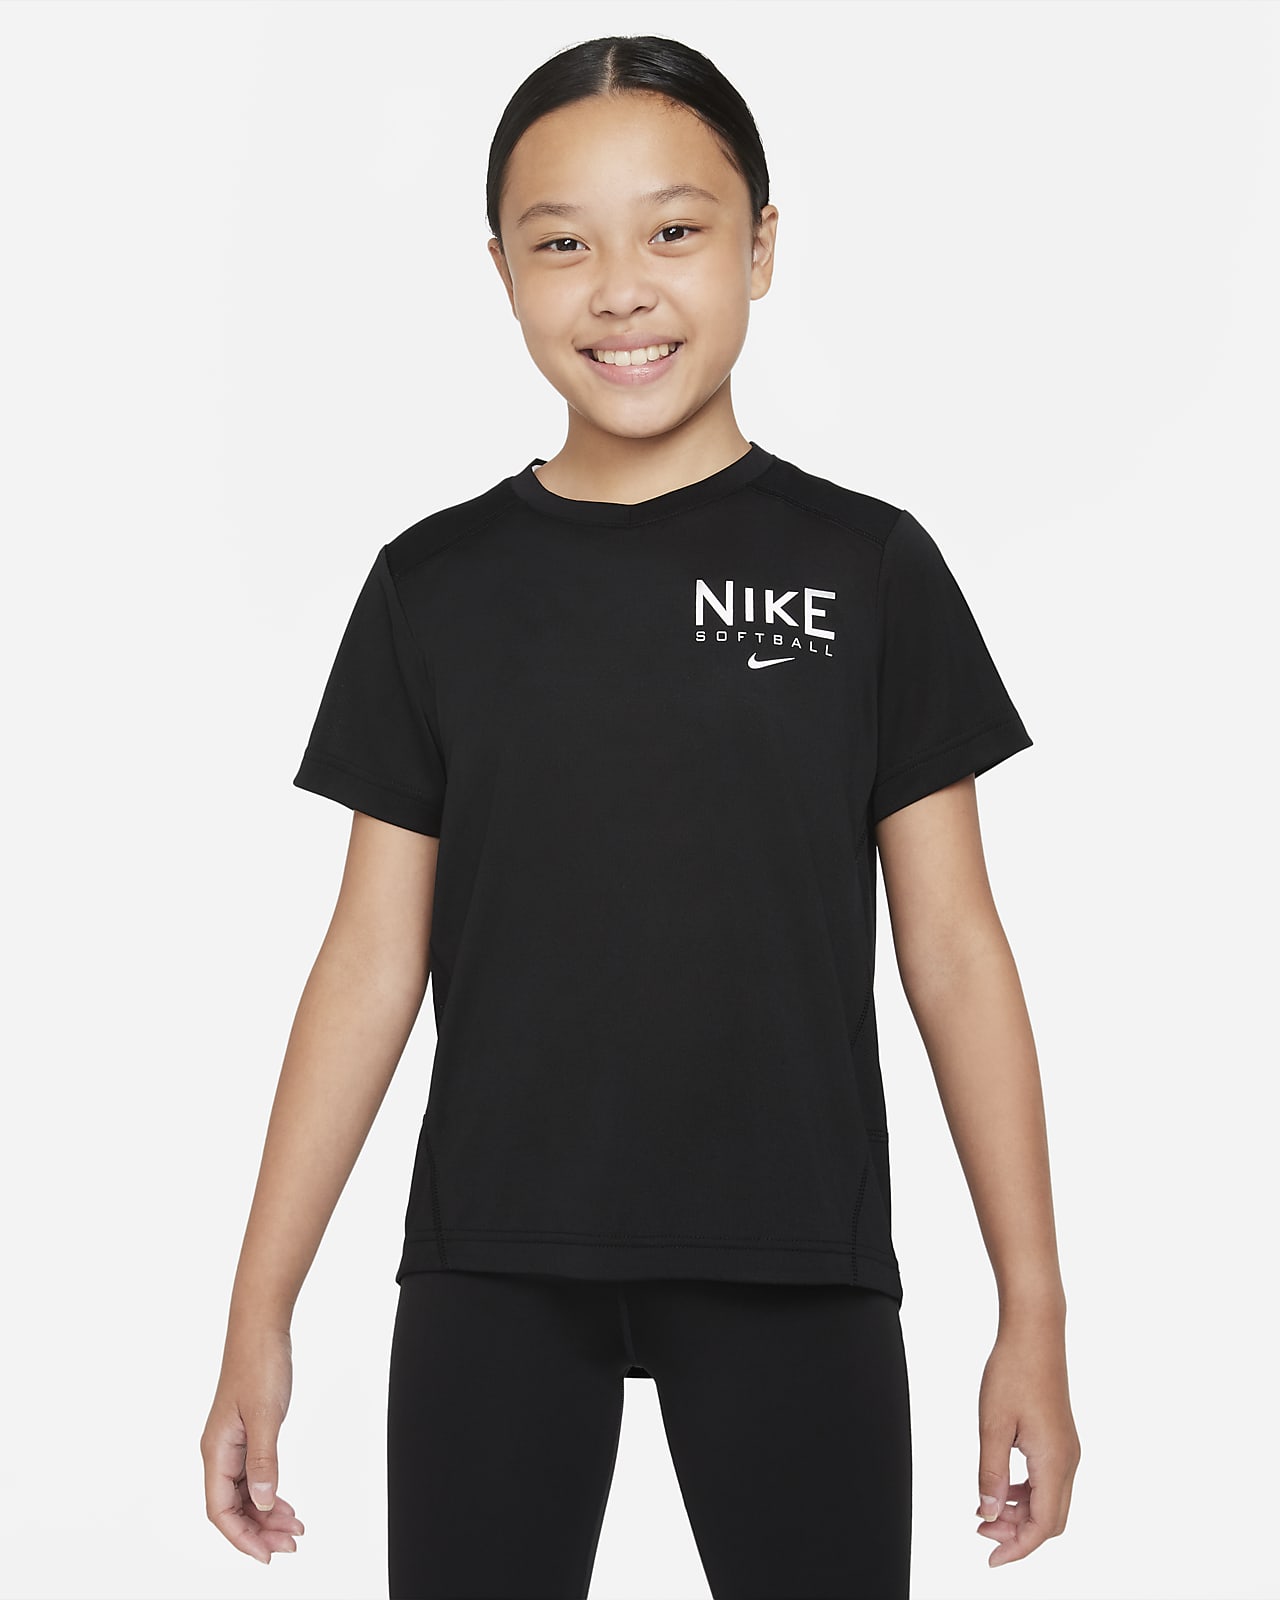 Nike Dri-FIT Big Top. Softball (Girls\') Kids\' Practice Short-Sleeve